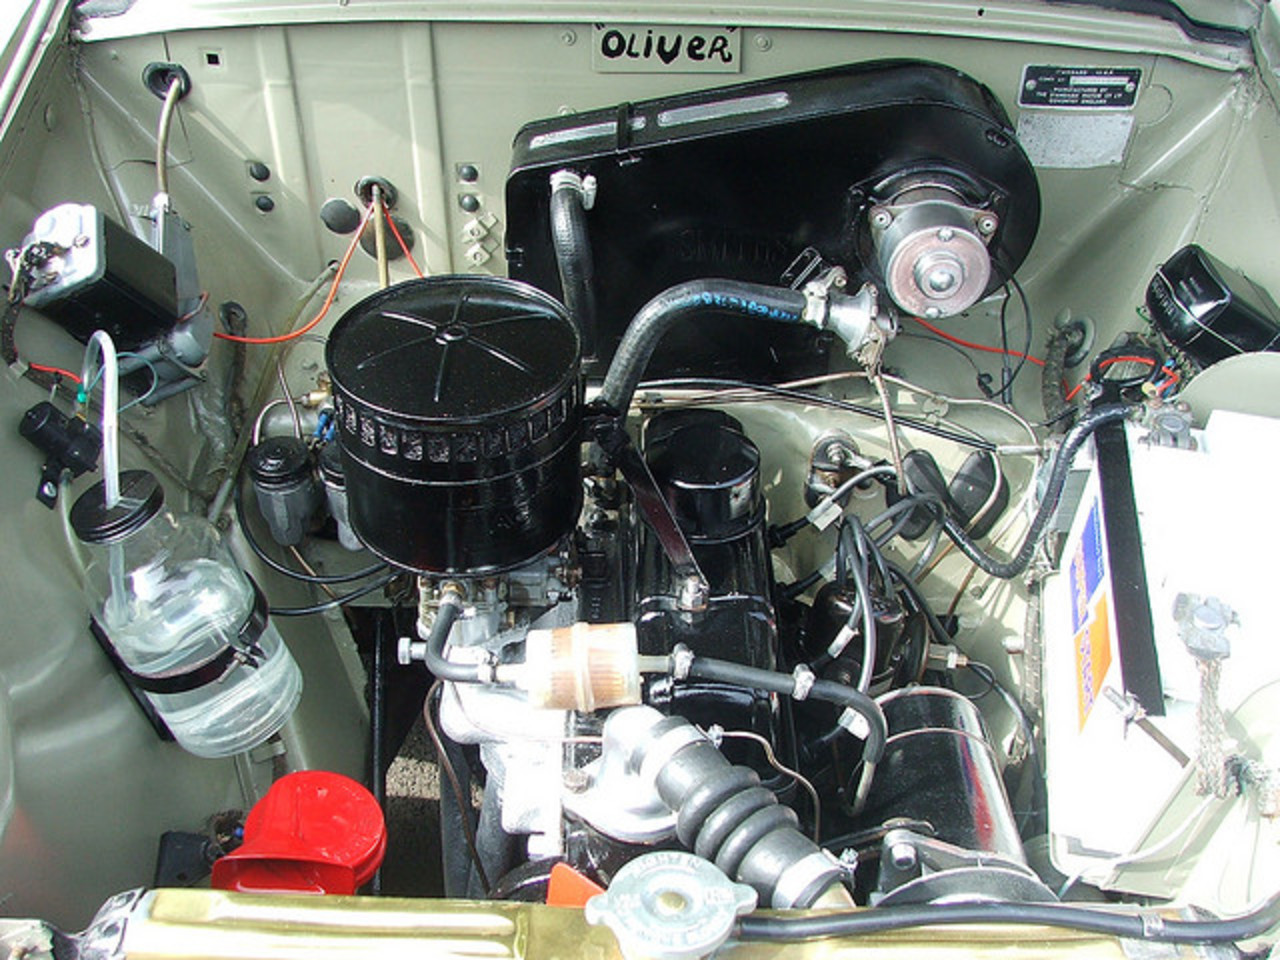 Standard 10 engine | Flickr - Photo Sharing!